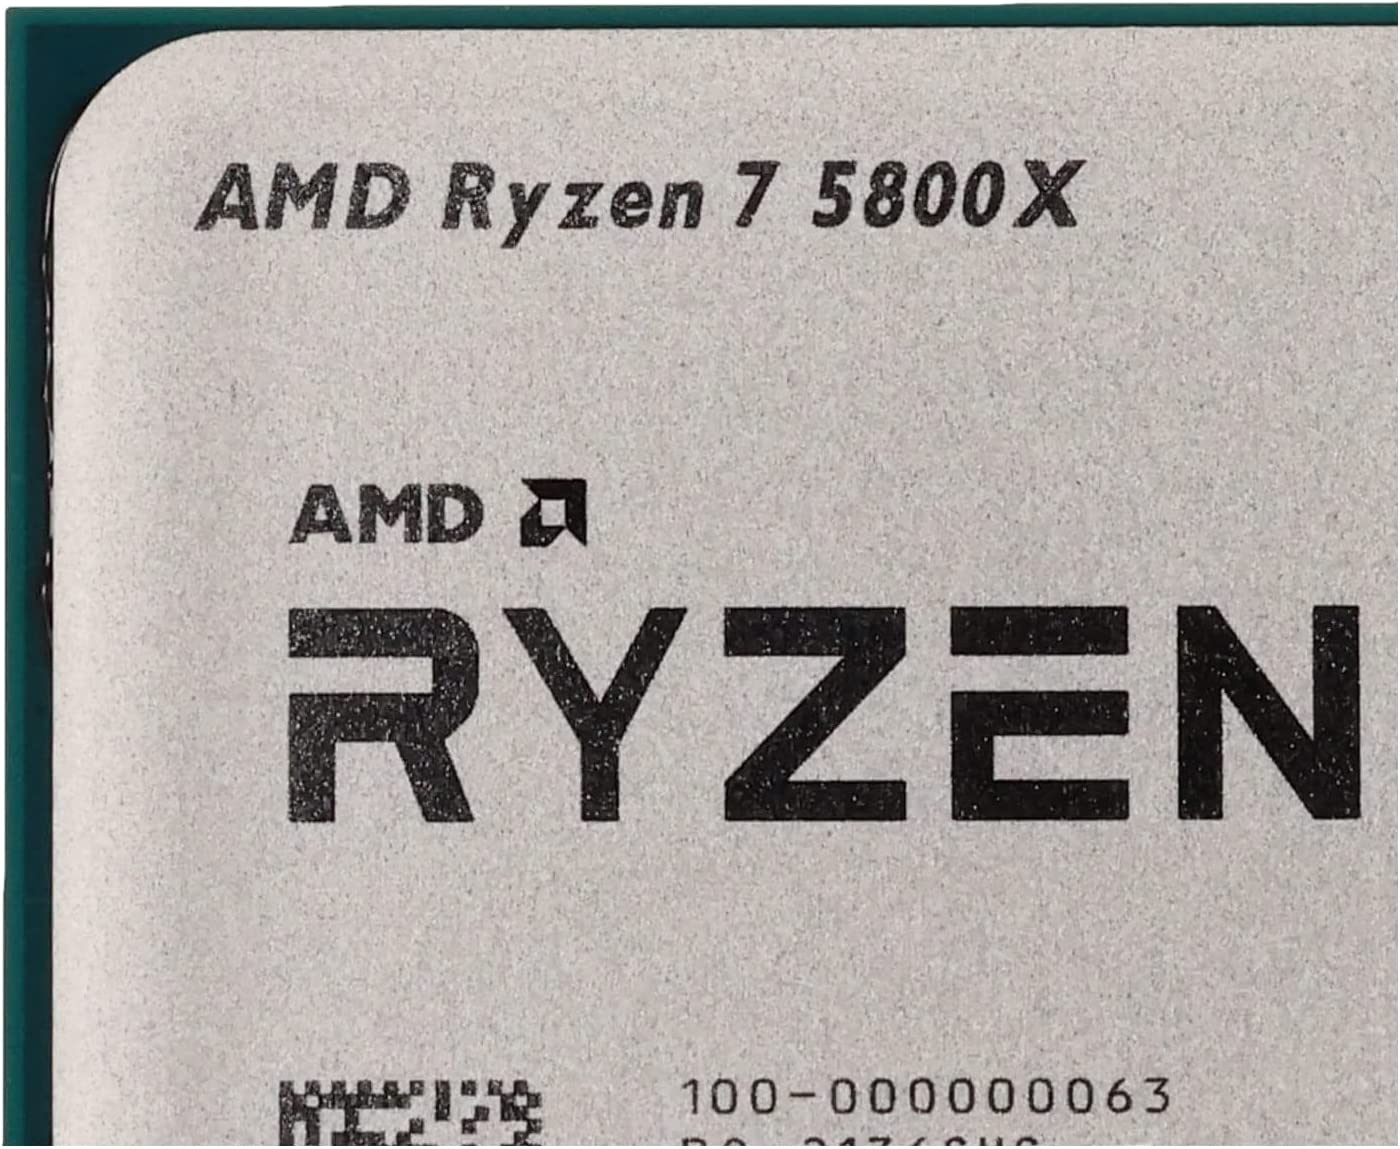 RYZEN 7 5800X AM4 AMD 36MB 4.7GHZ